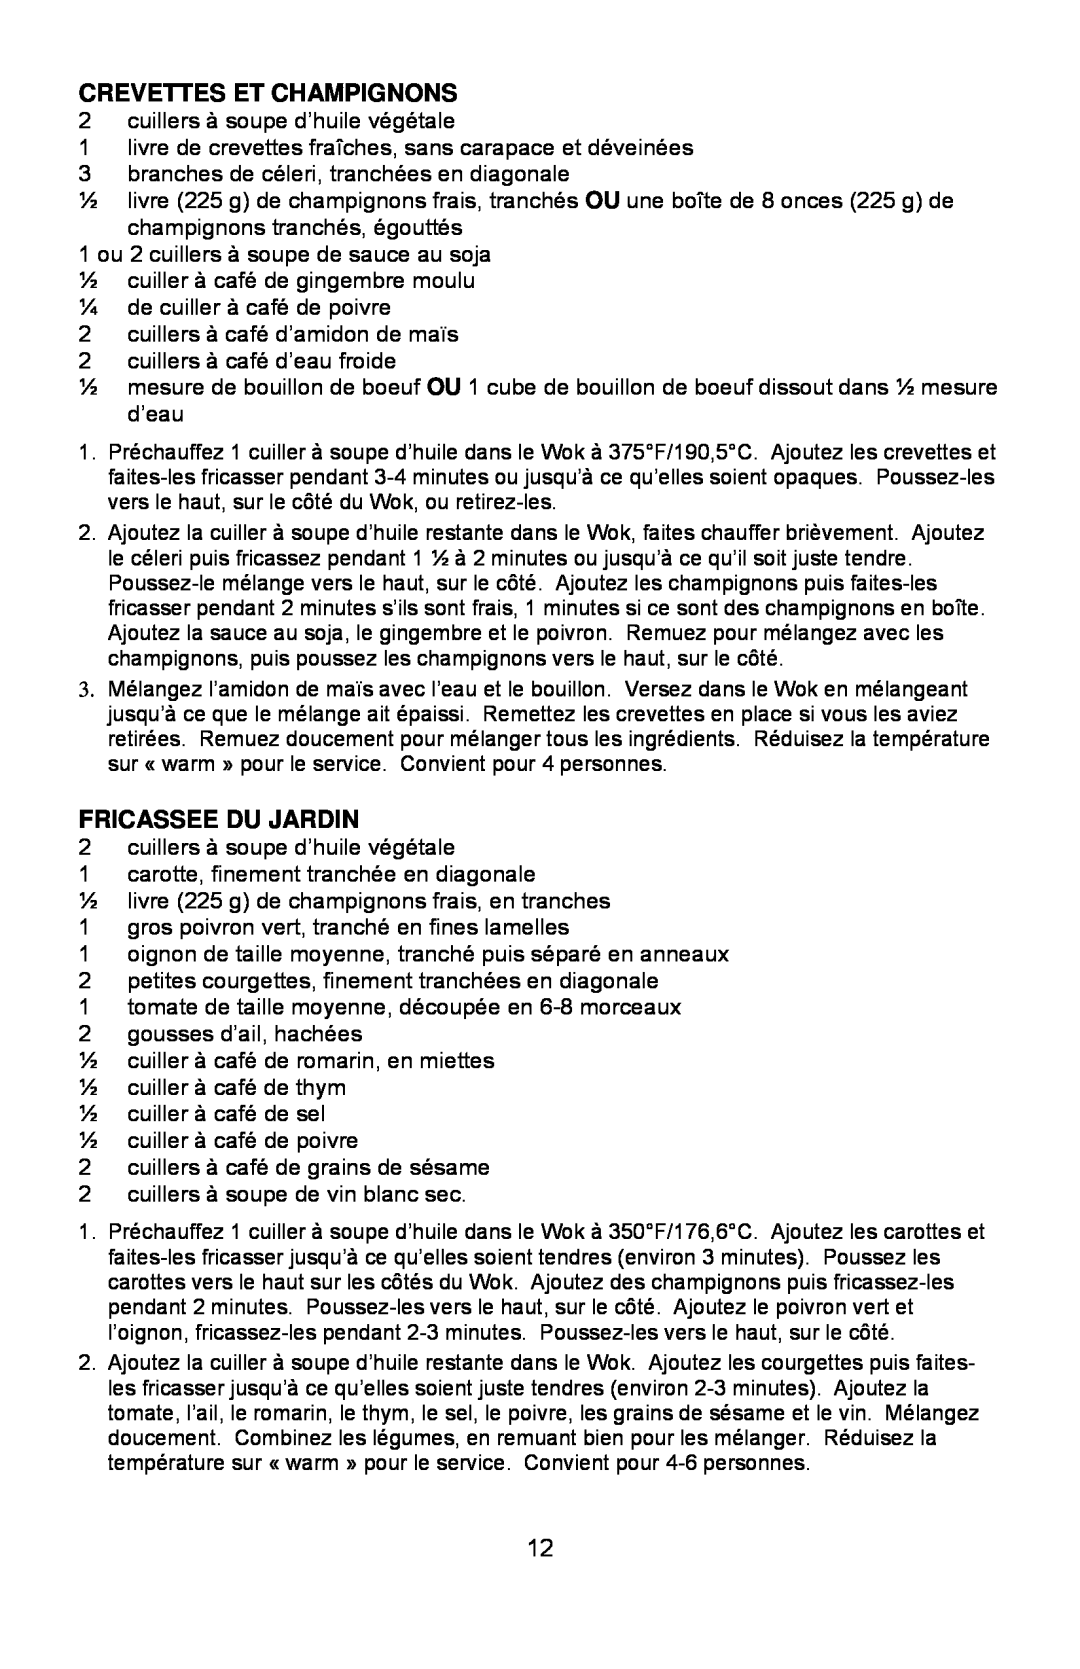 West Bend Housewares Electric Wok instruction manual Crevettes Et Champignons, Fricassee Du Jardin 